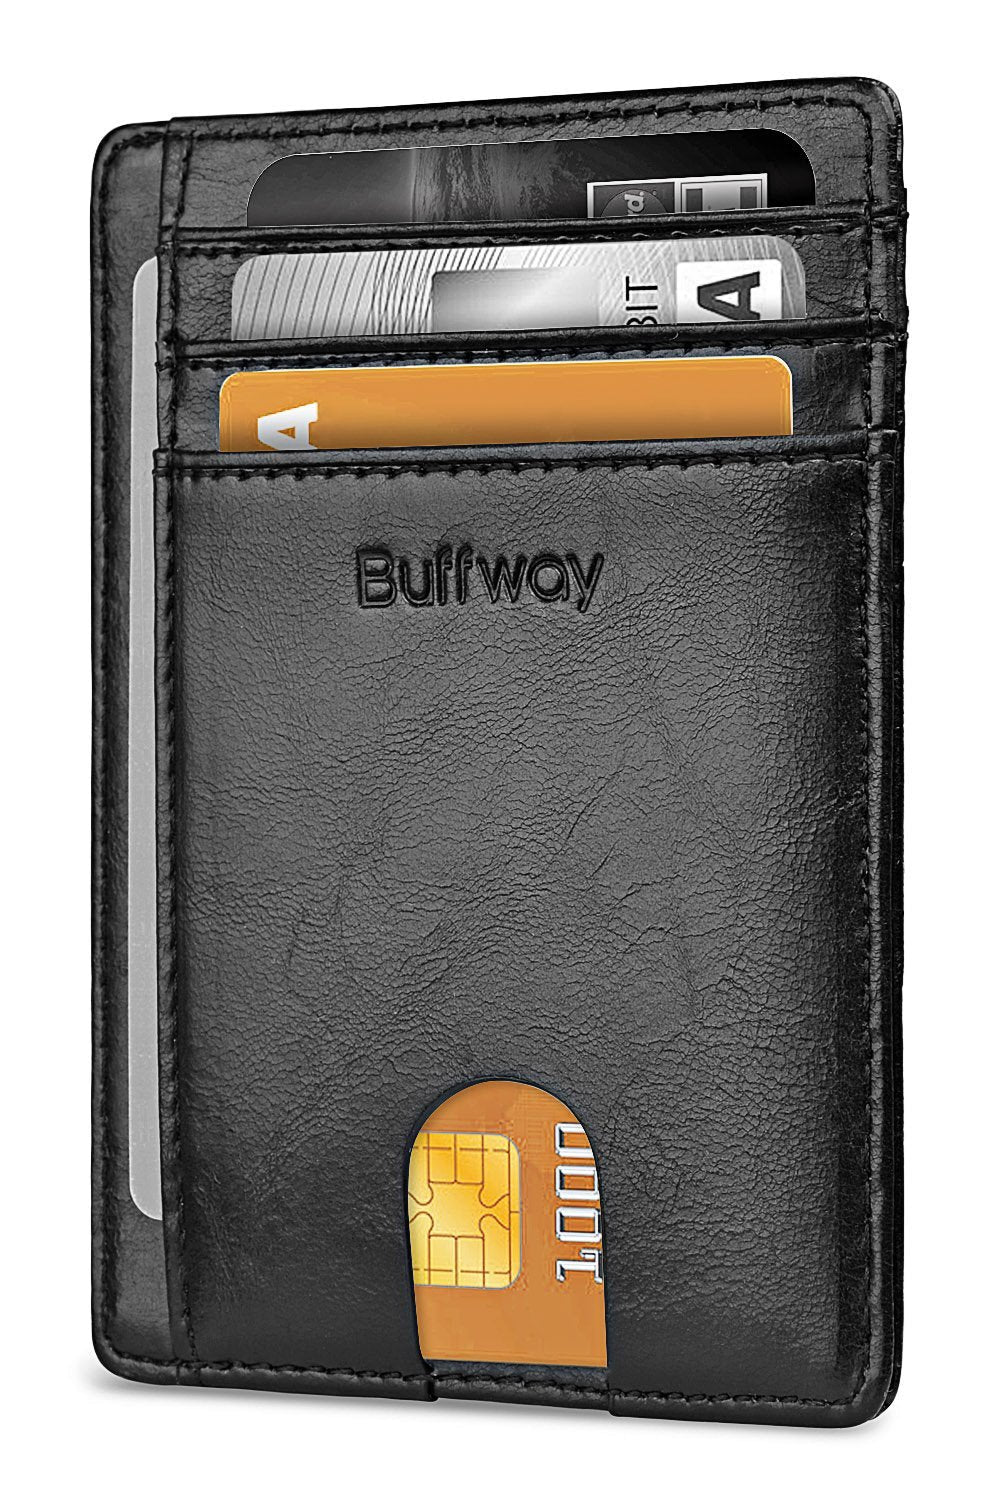 [Australia] - Buffway Slim Minimalist Front Pocket RFID Blocking Leather Wallets for Men Women Alaska Black 